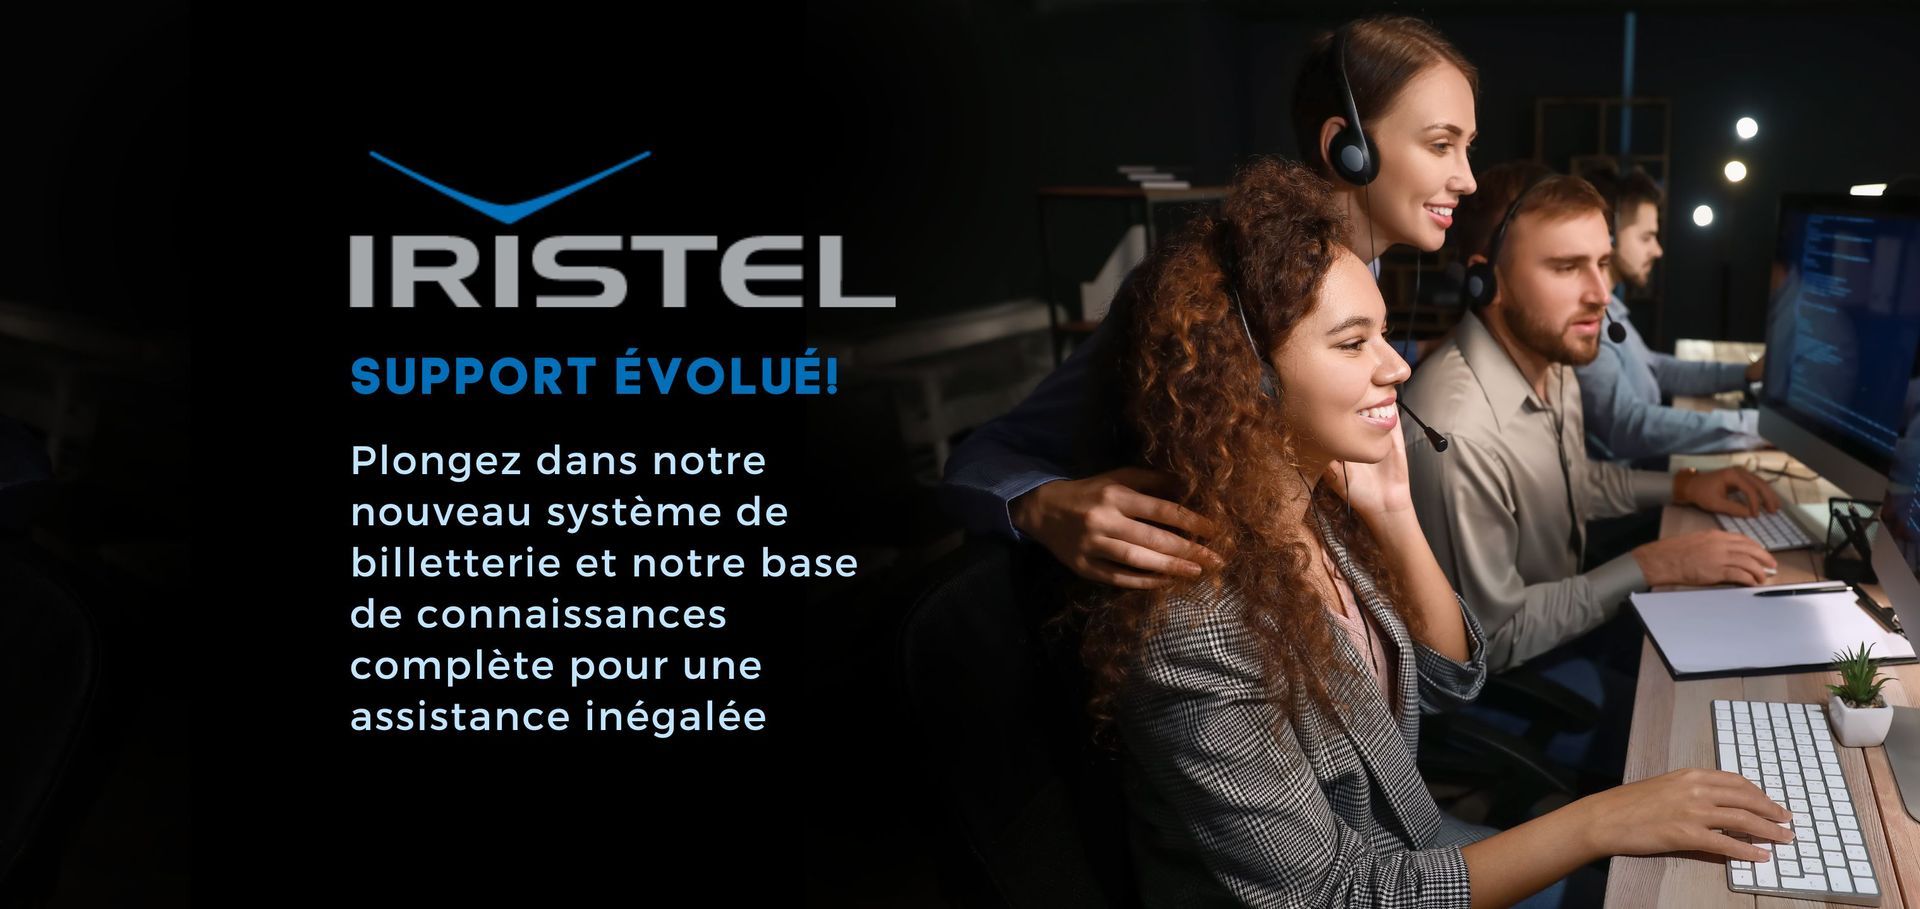 Iristel's Support Evolved!